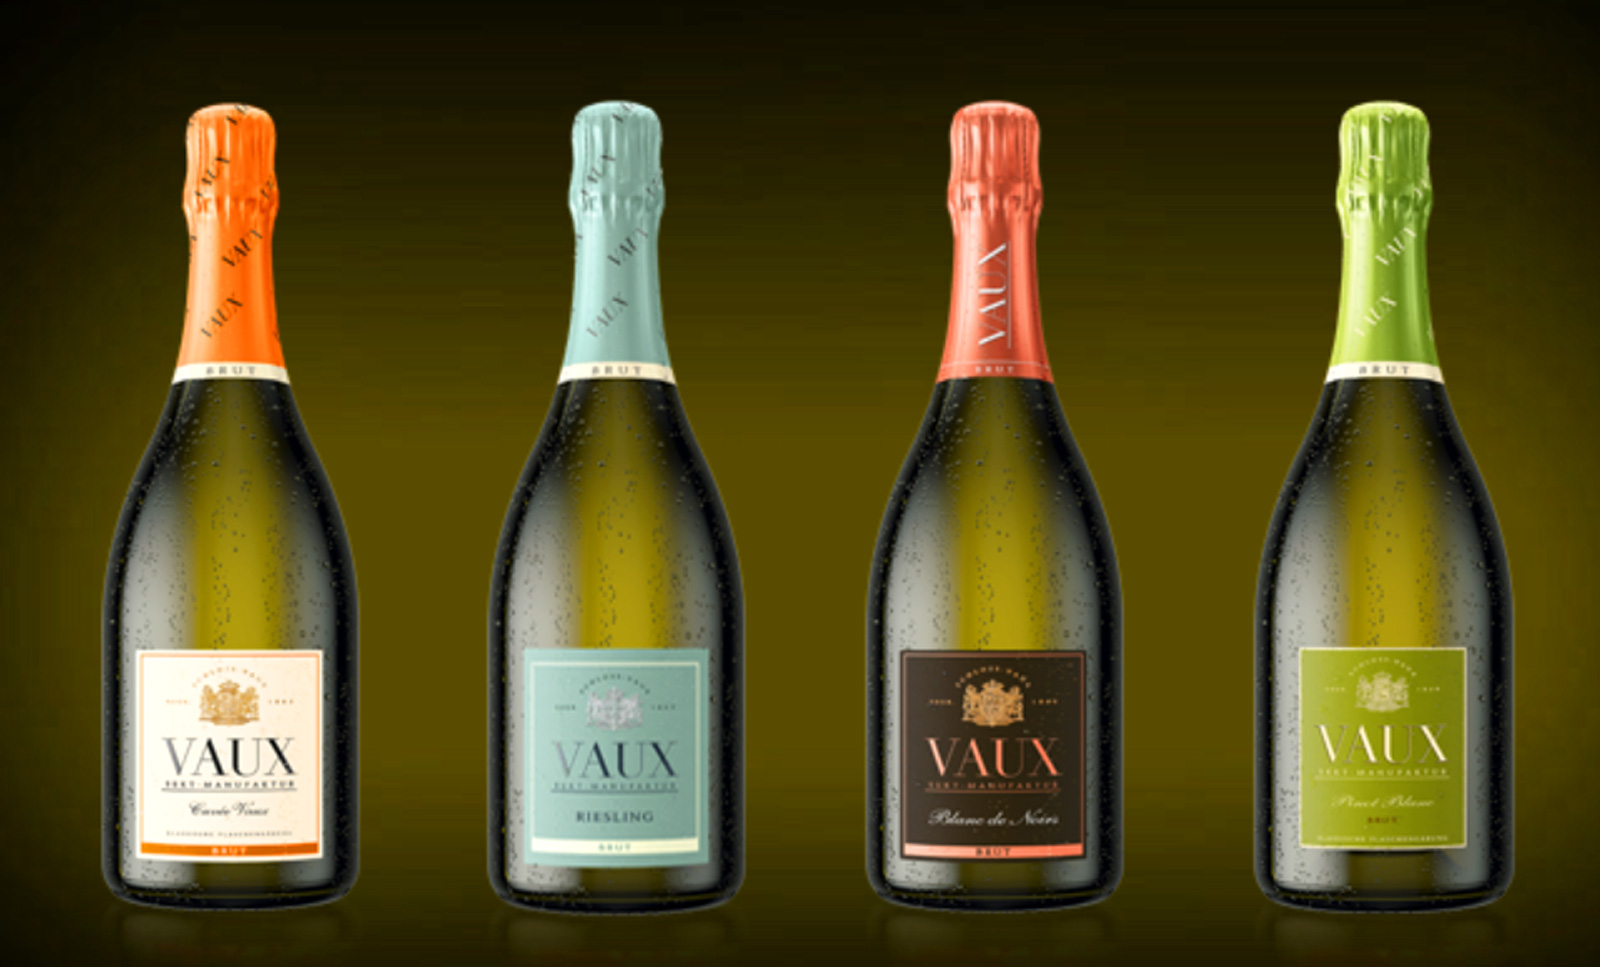 CHAMPAGNE HRAD VAUX Vsetky sumive vina VAUX su vyrabane tradicnou metodou klasickej flasovej fermentacie a su brut davkovane.